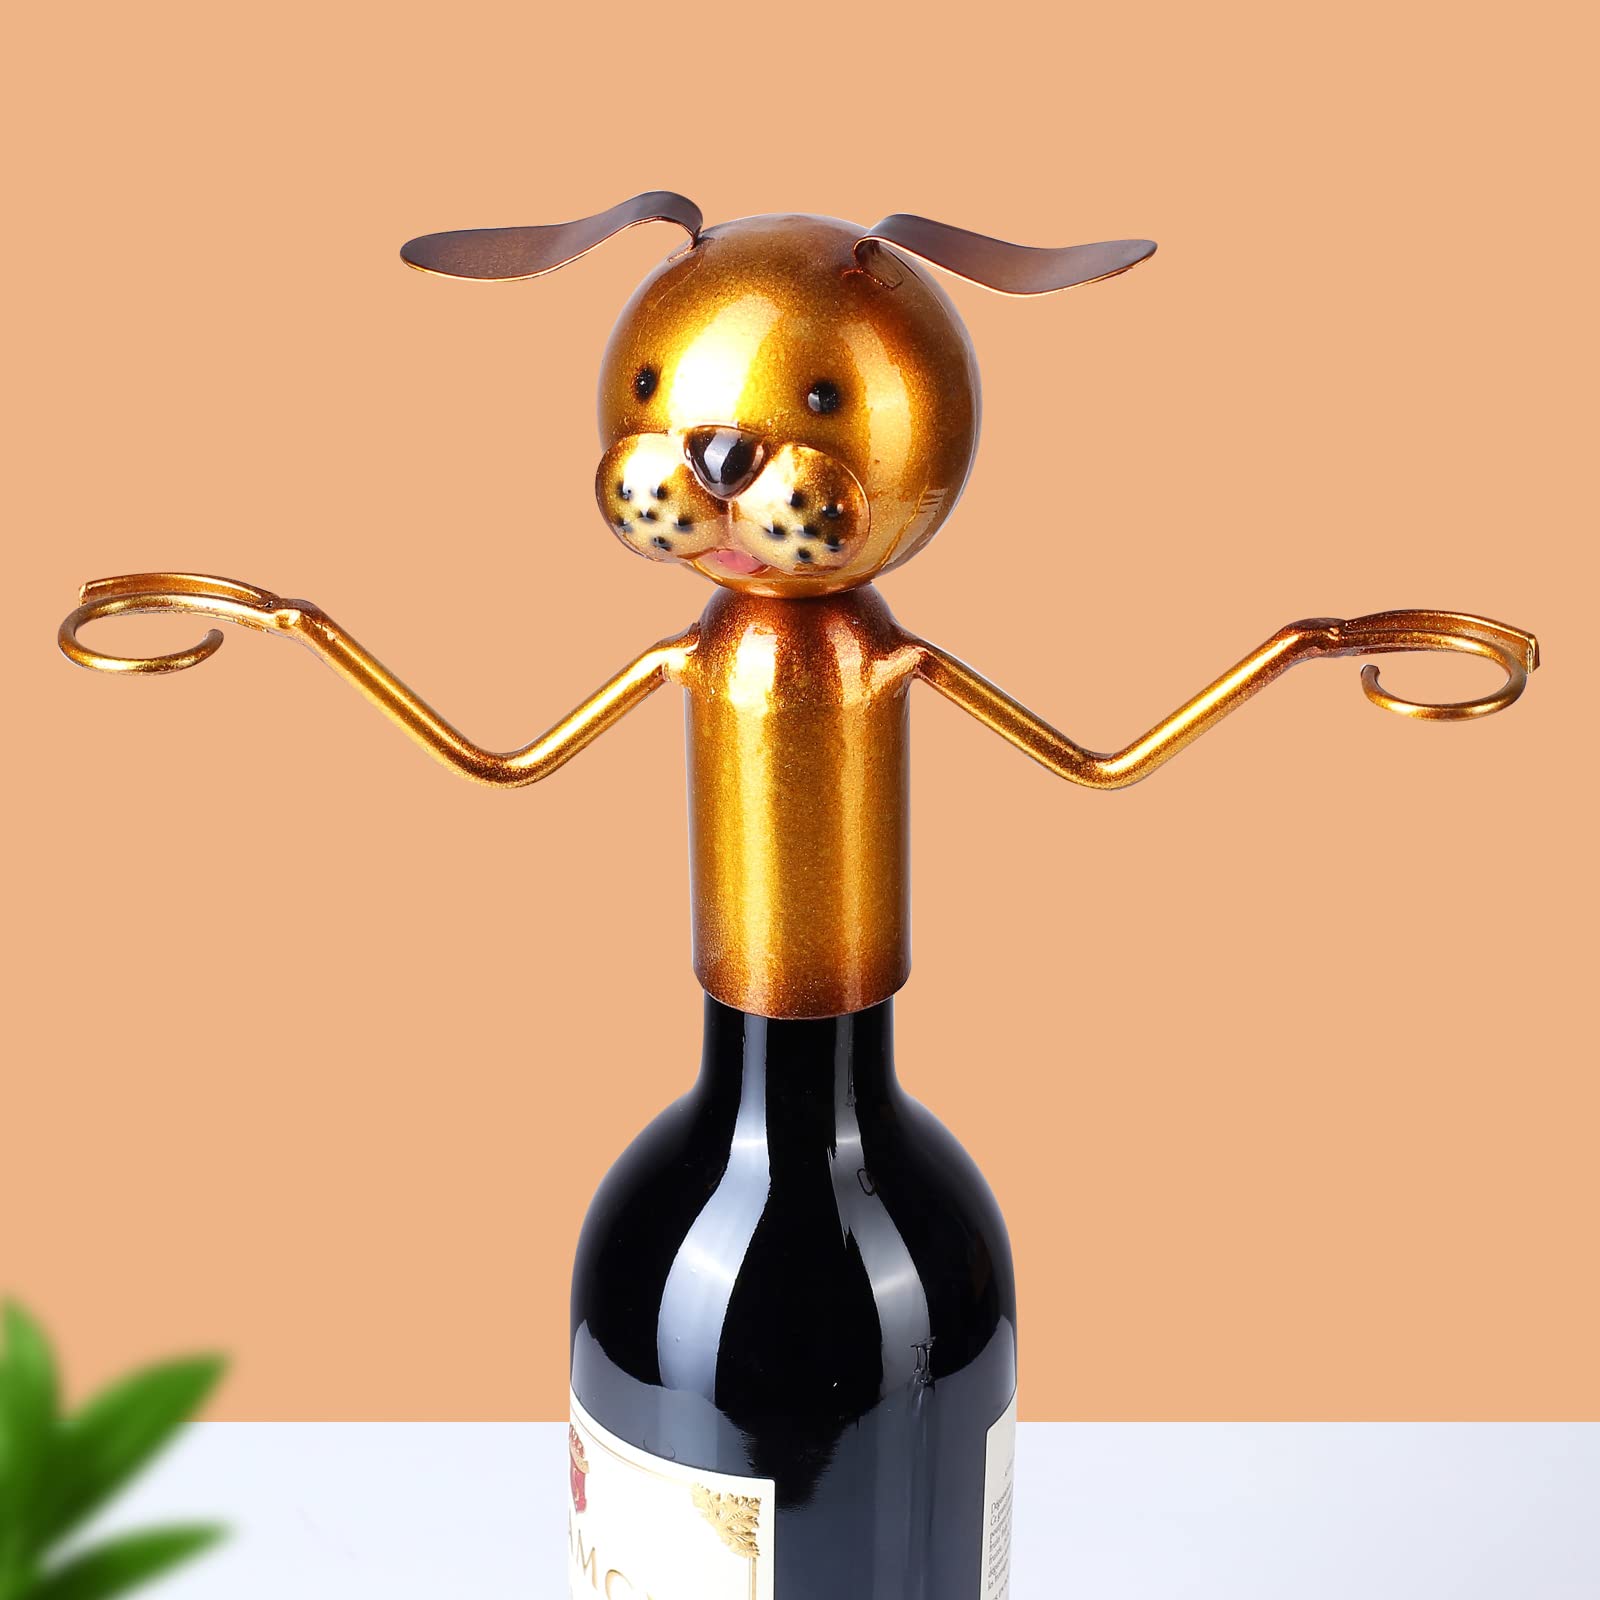 Drincarier Dog Decor Wine Glass and Bottle Holder Tabletop Wine Racks Shelf Metal Home Decor Wine Decor,Hold 1 Wine Bottle and 2 Glasses (Dog Wine Glass Holder)………